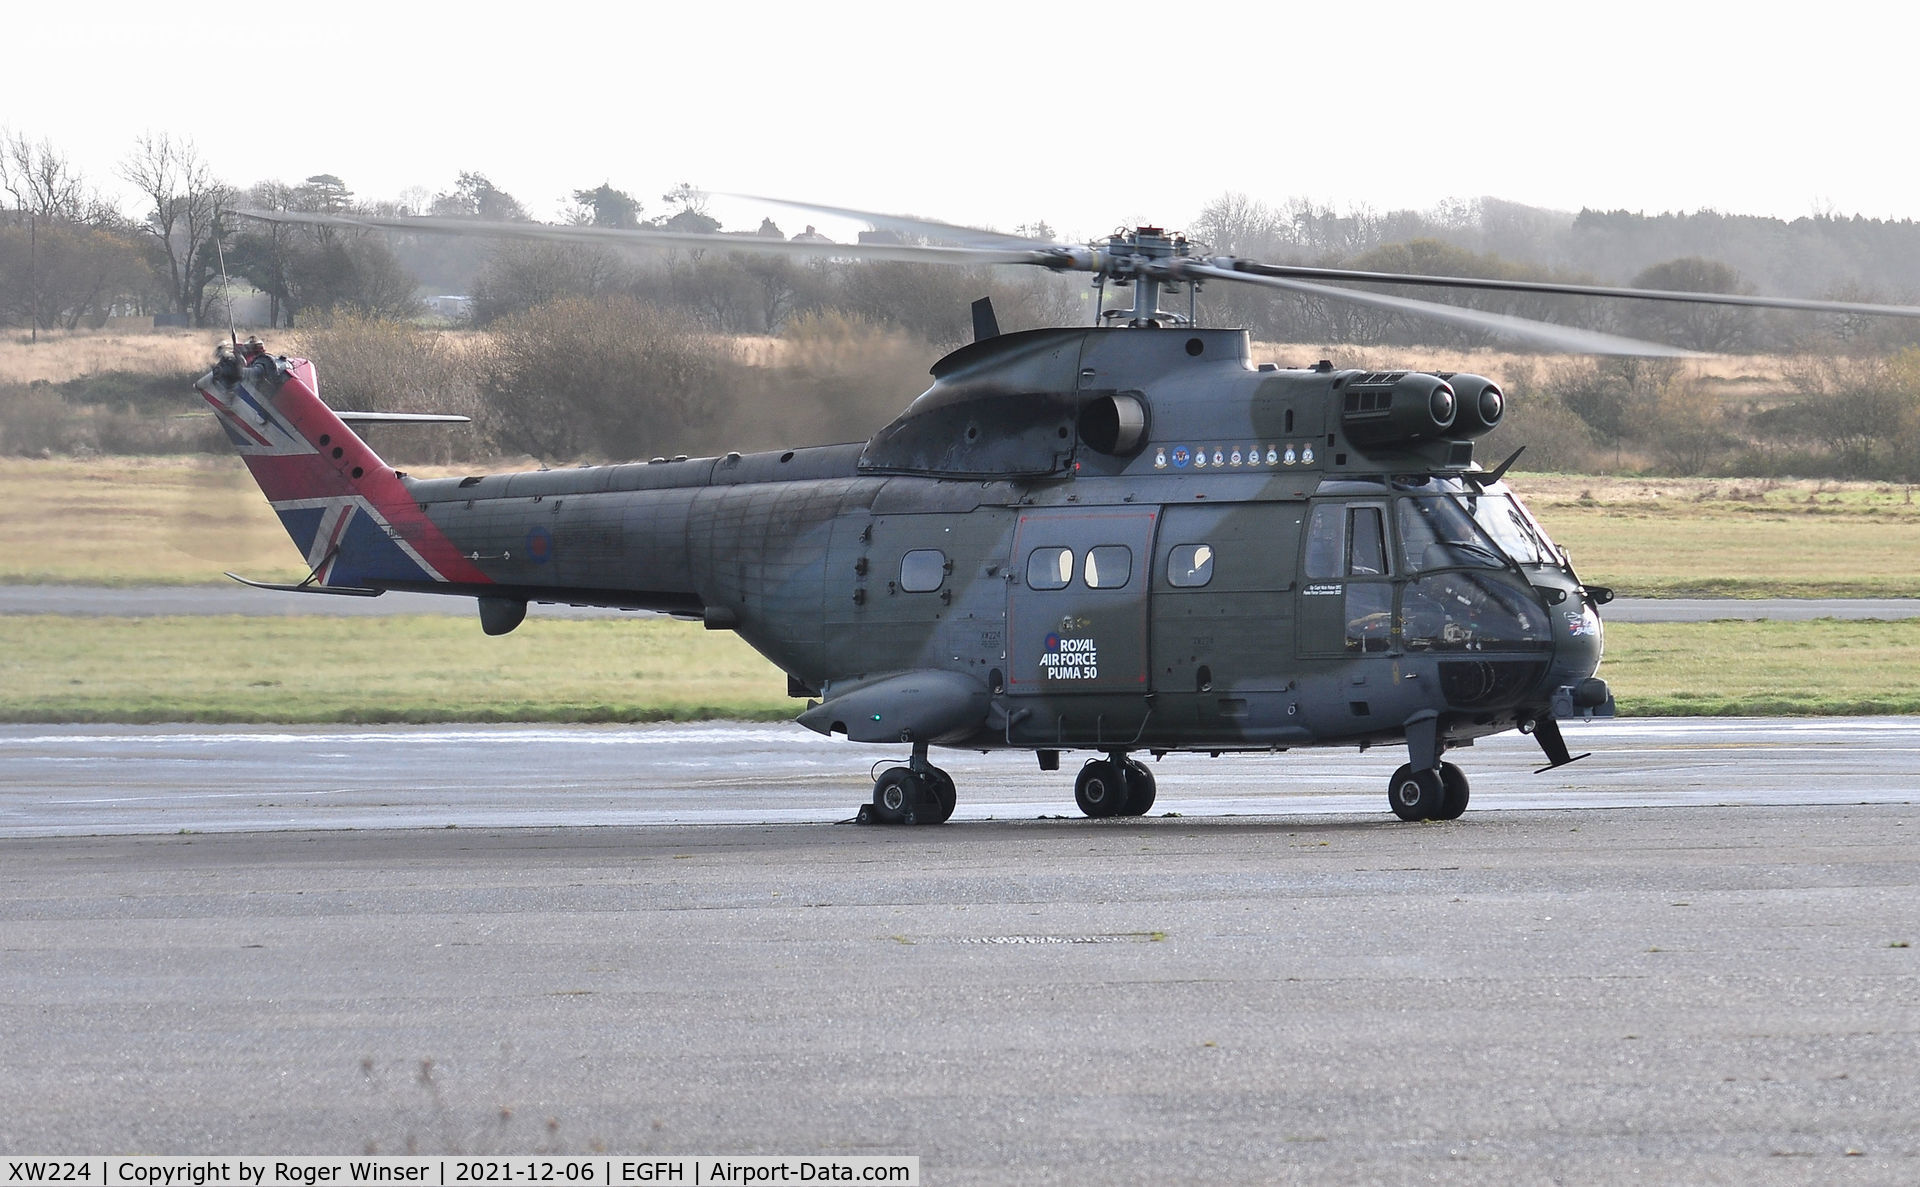 XW224, Westland Puma HC.2 C/N 1166, In 50th anniversary markings of RAF Puma helicopter operations (1971 to 2021).